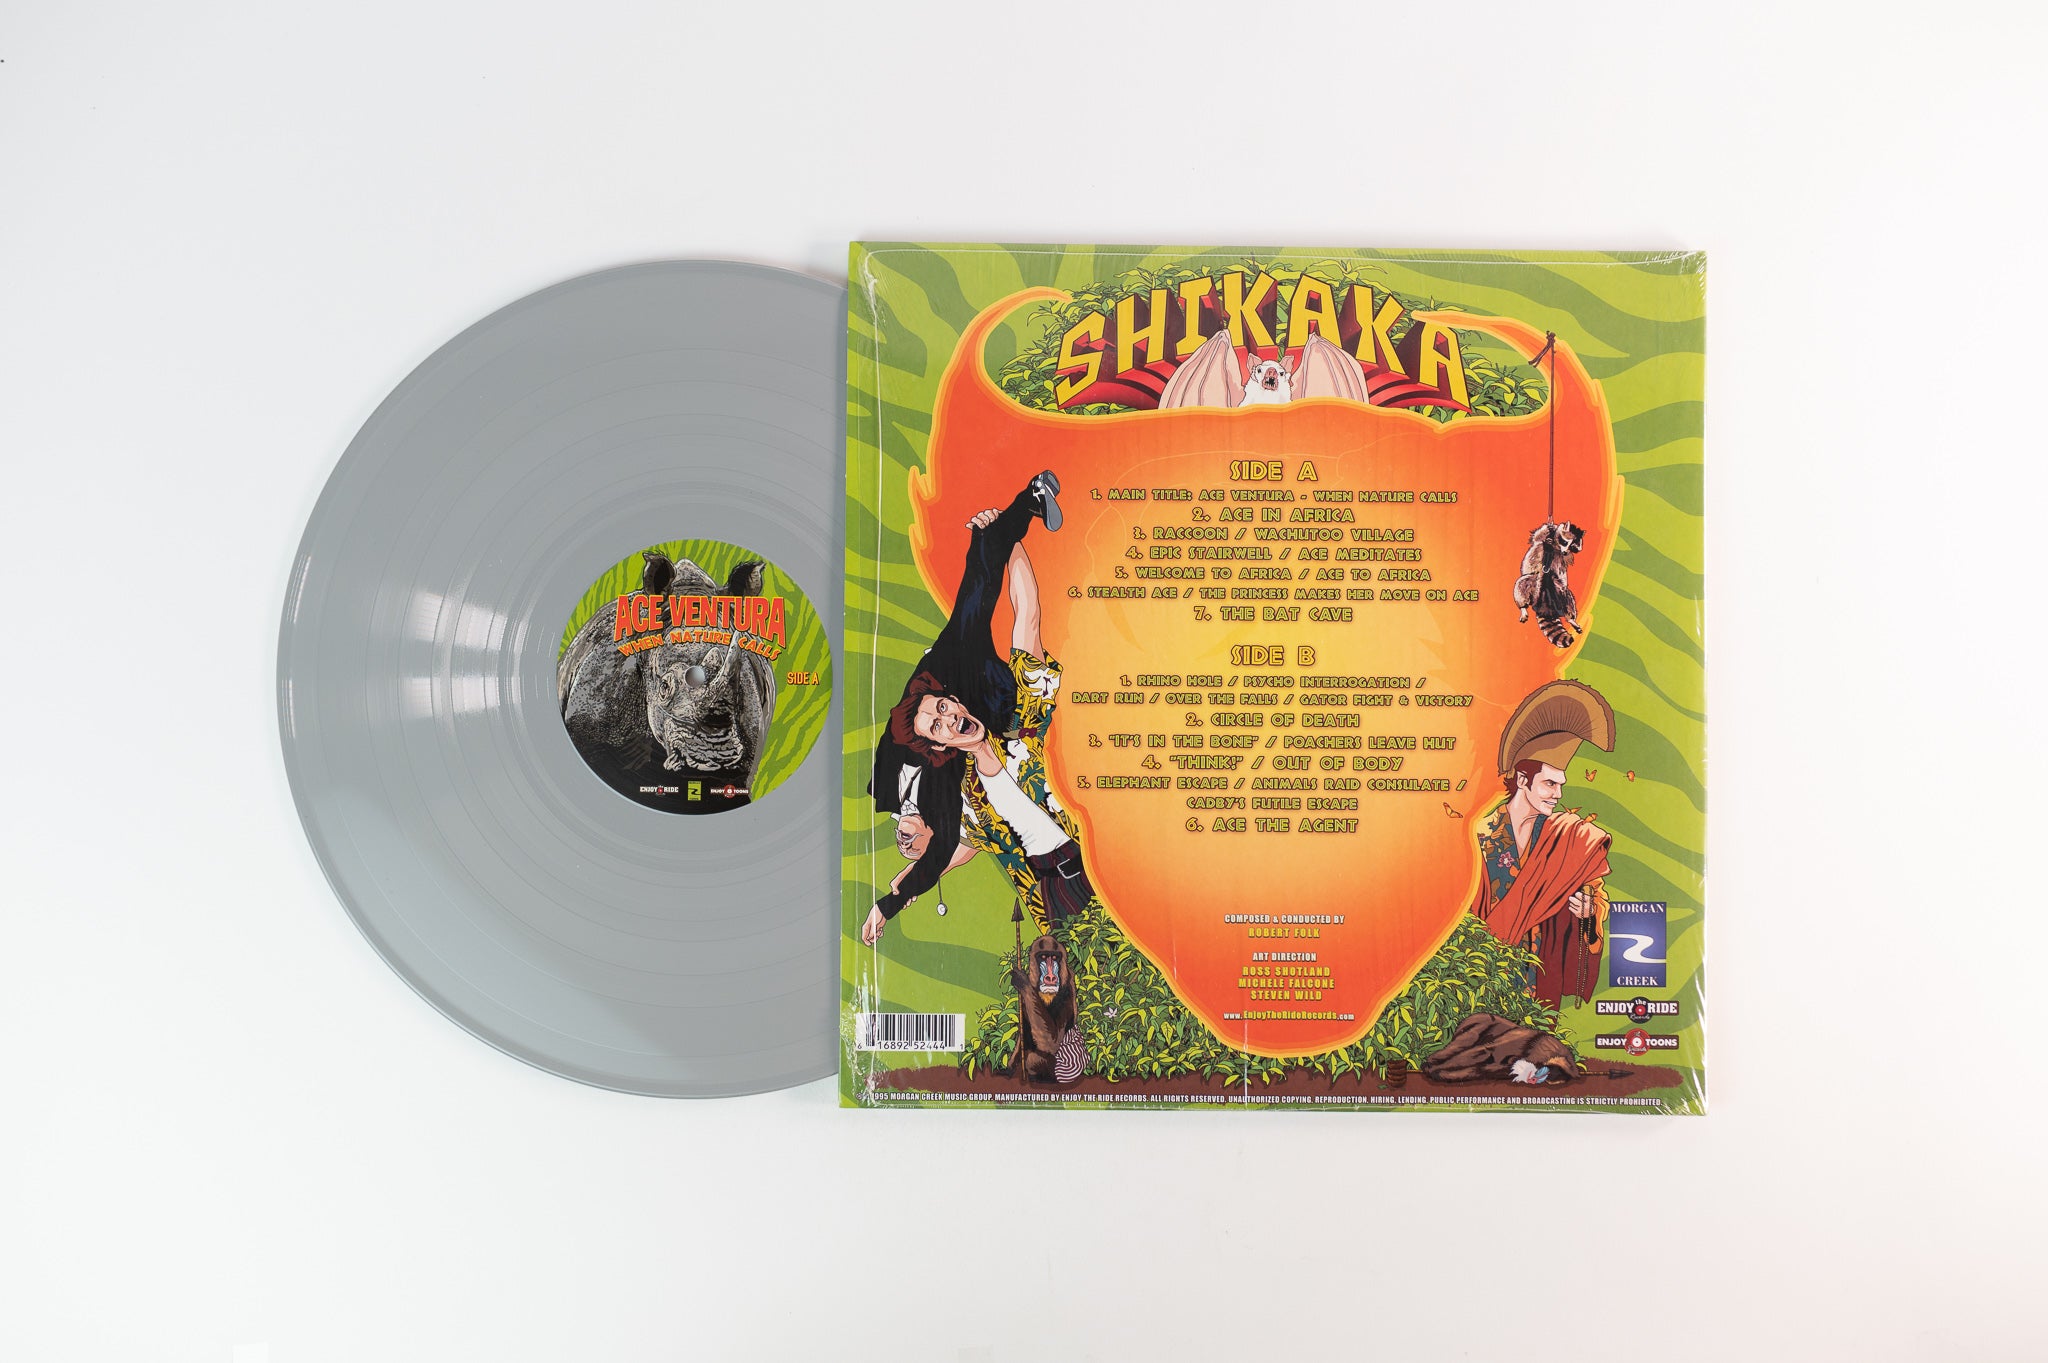 Robert Folk - Ace Ventura: When Nature Calls (Original Motion Picture Score) on Enjoy The Ride Records - "Rhino Grey" Colored Vinyl